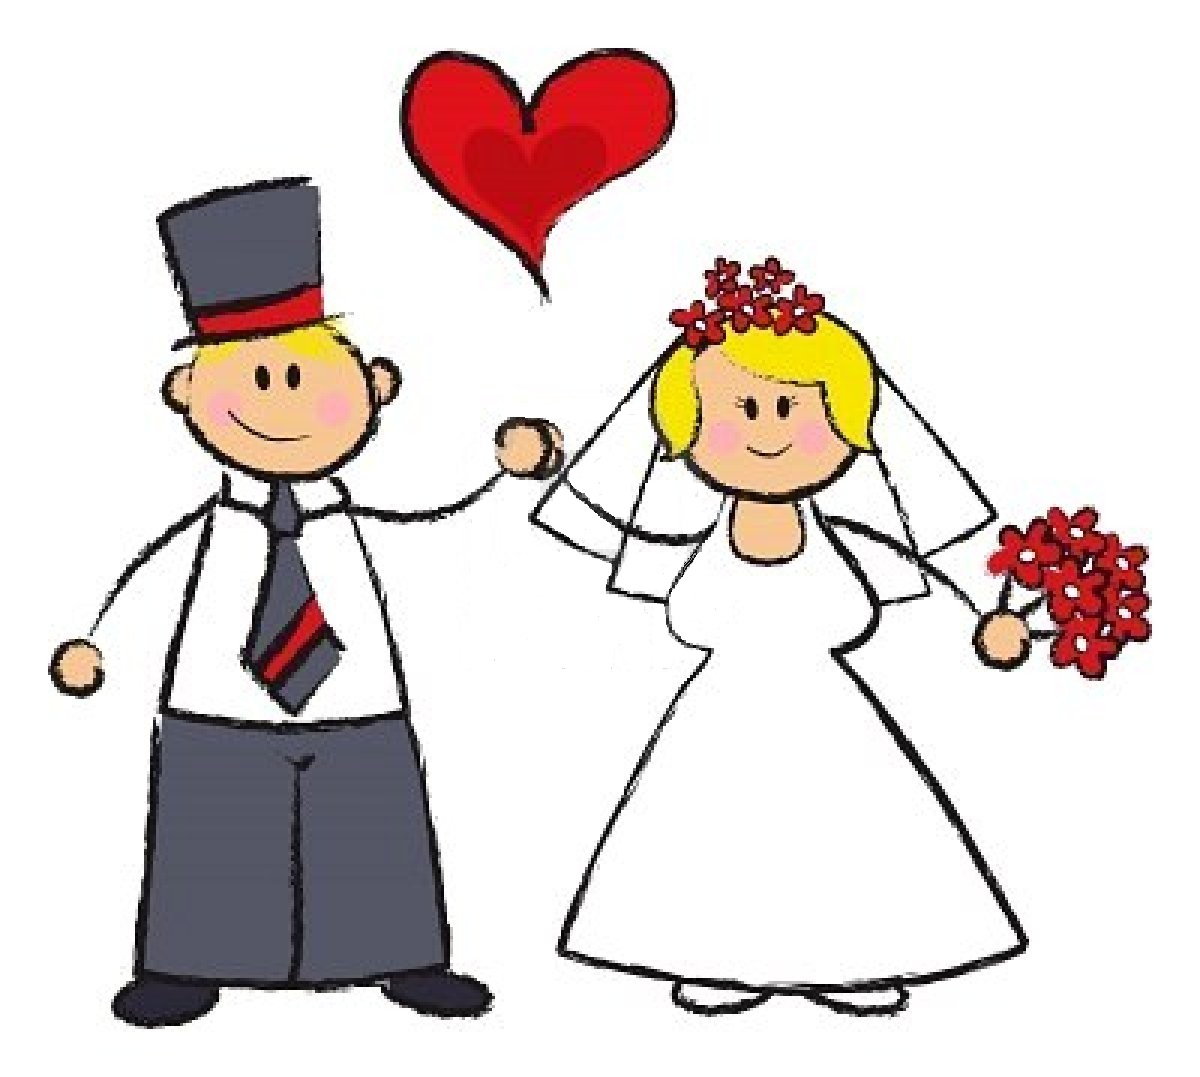 http://3.bp.blogspot.com/-vyY53HvSWdU/T4k1niPpu2I/AAAAAAAAC2c/Zha-OJDPBs0/s1600/1805263-ust-married--cartoon-illustration-of-a-wedding-couple-in-fair-skin-tone.jpg